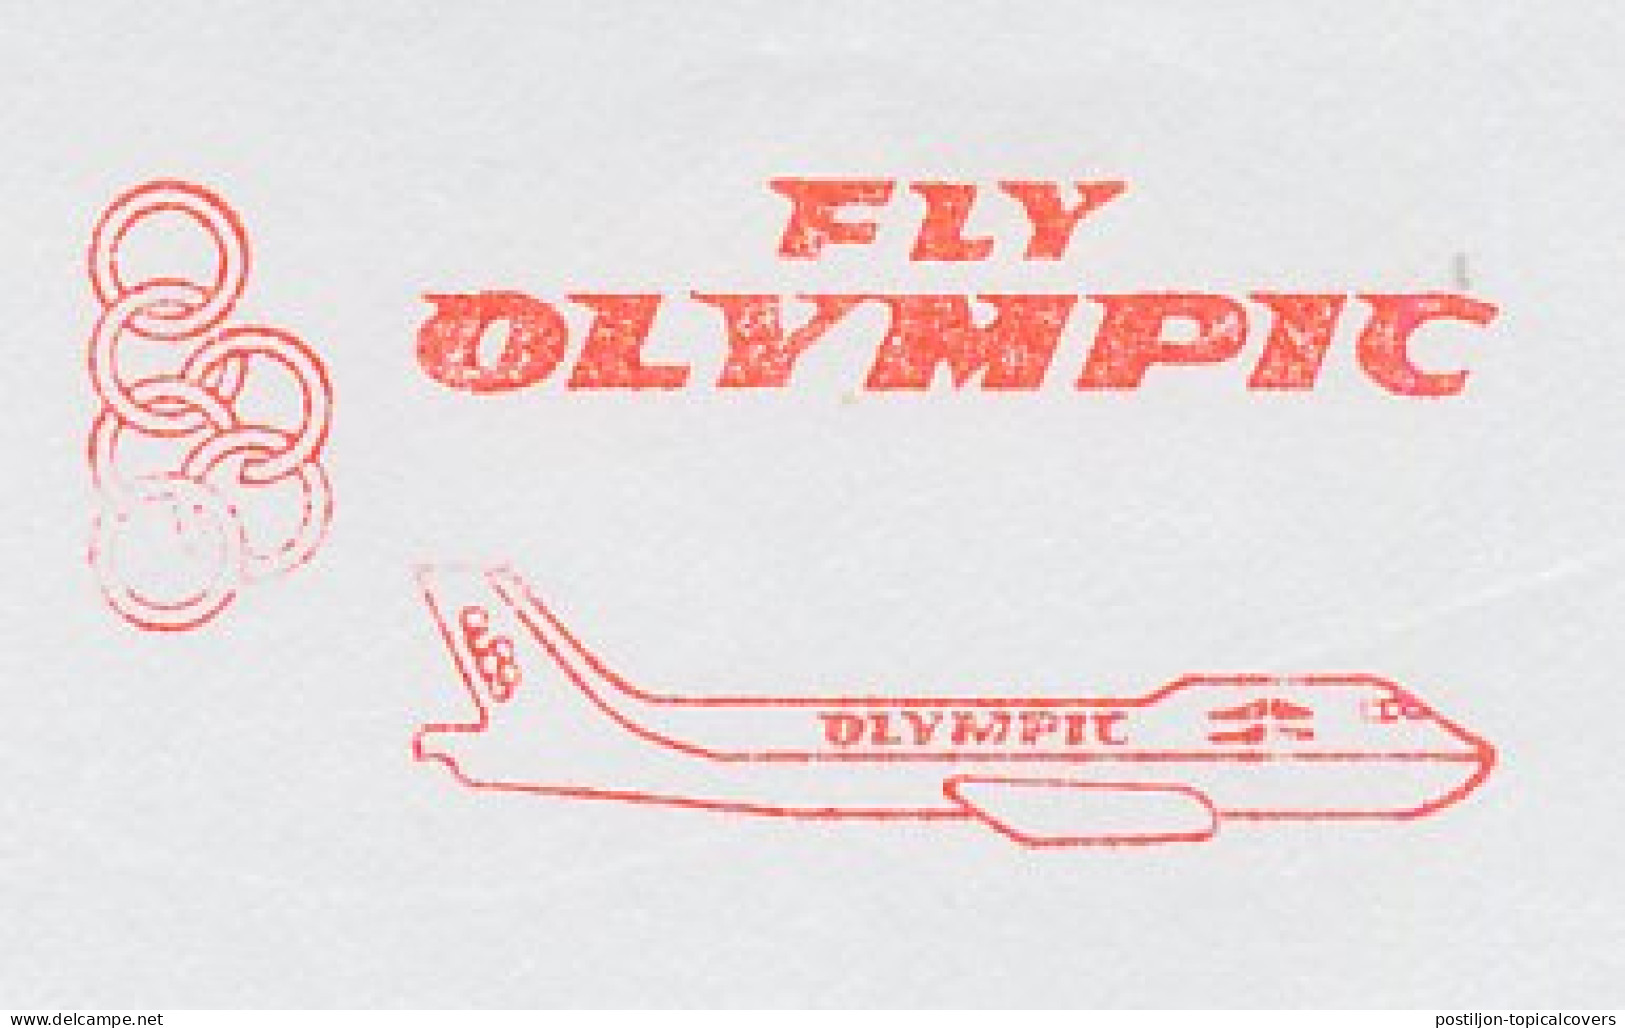 Meter Top Cut Netherlands 1992 Olympic Airways - Flugzeuge